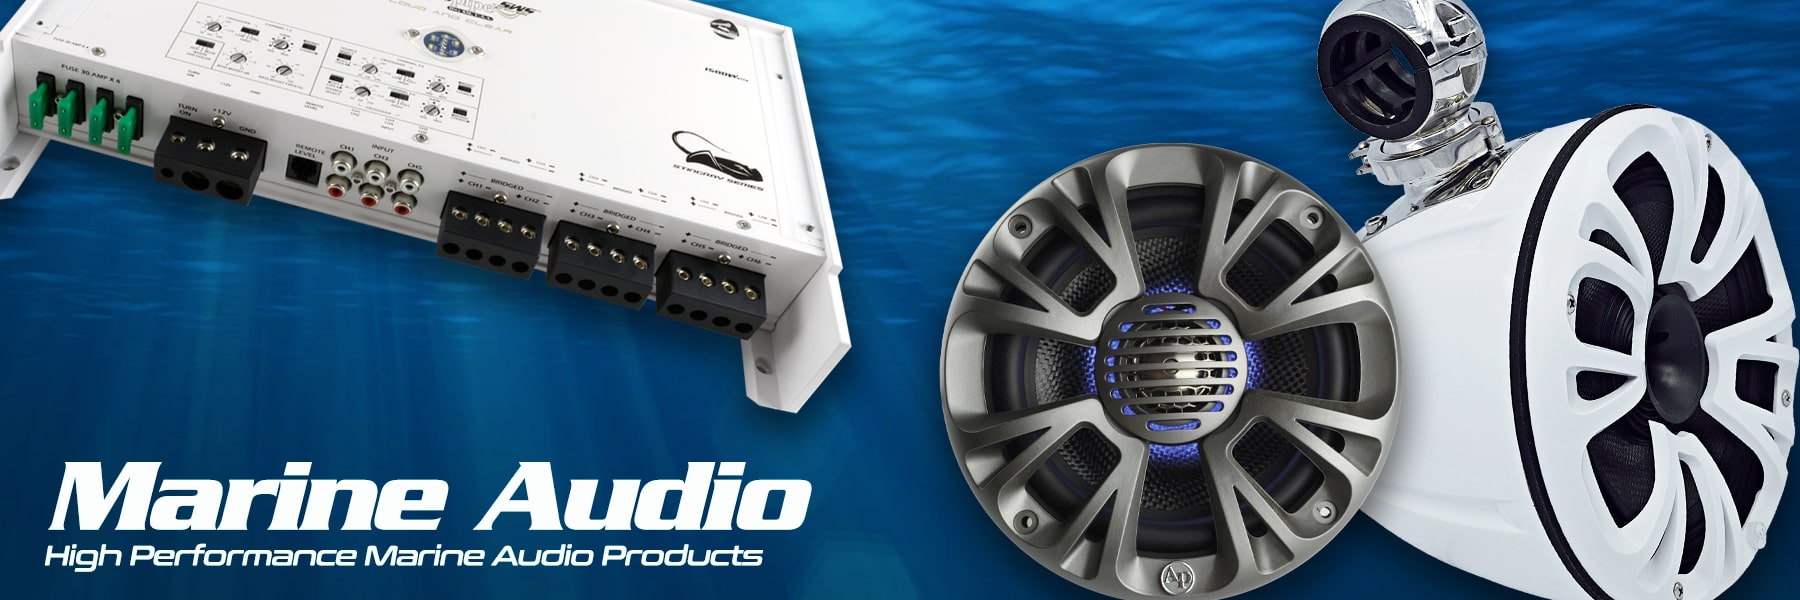 high performance marine audio products